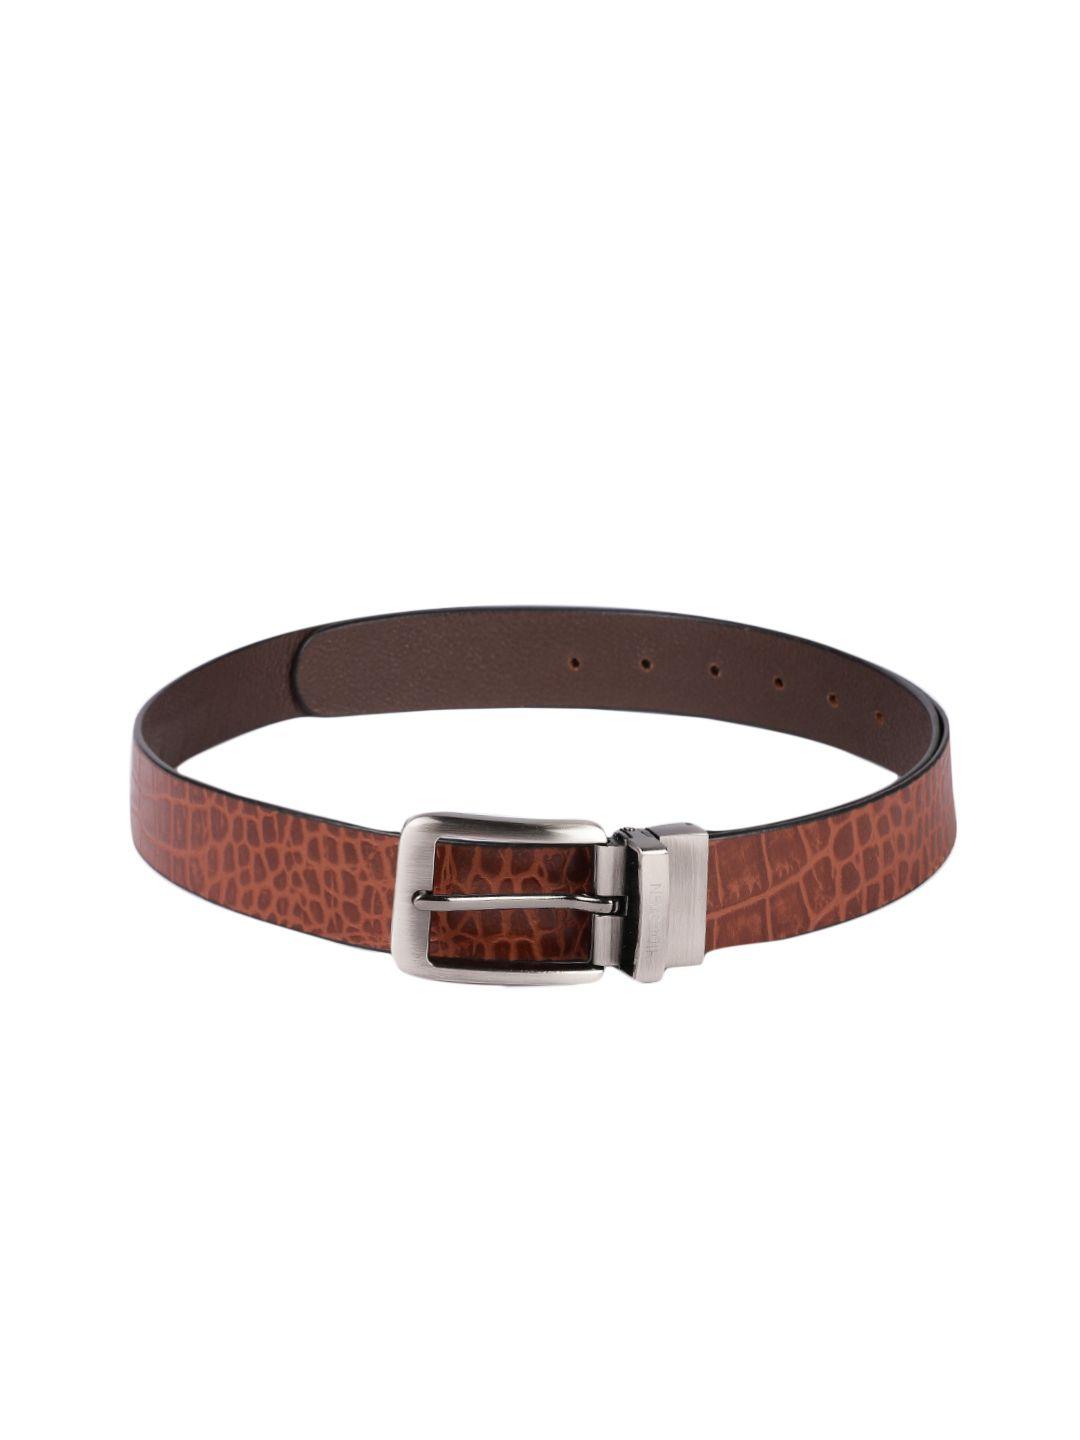 hidesign-men-tan-brown-textured-reversible-leather-belt